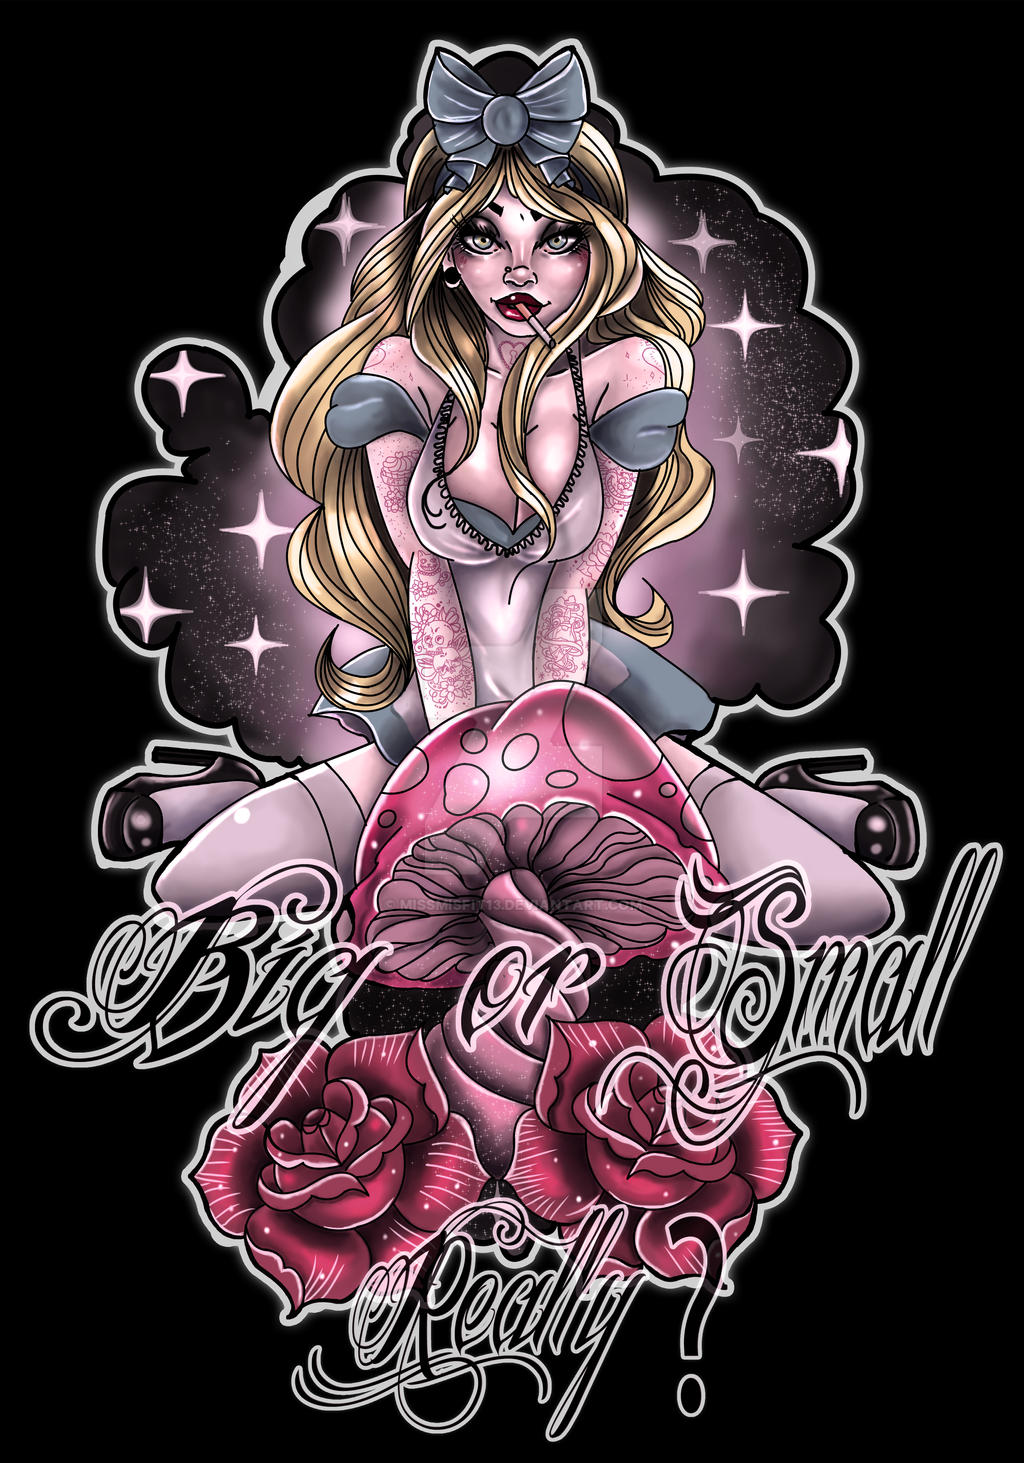 Pin up Alice in the wonderland tattoo by MissMisfit13 on DeviantArt